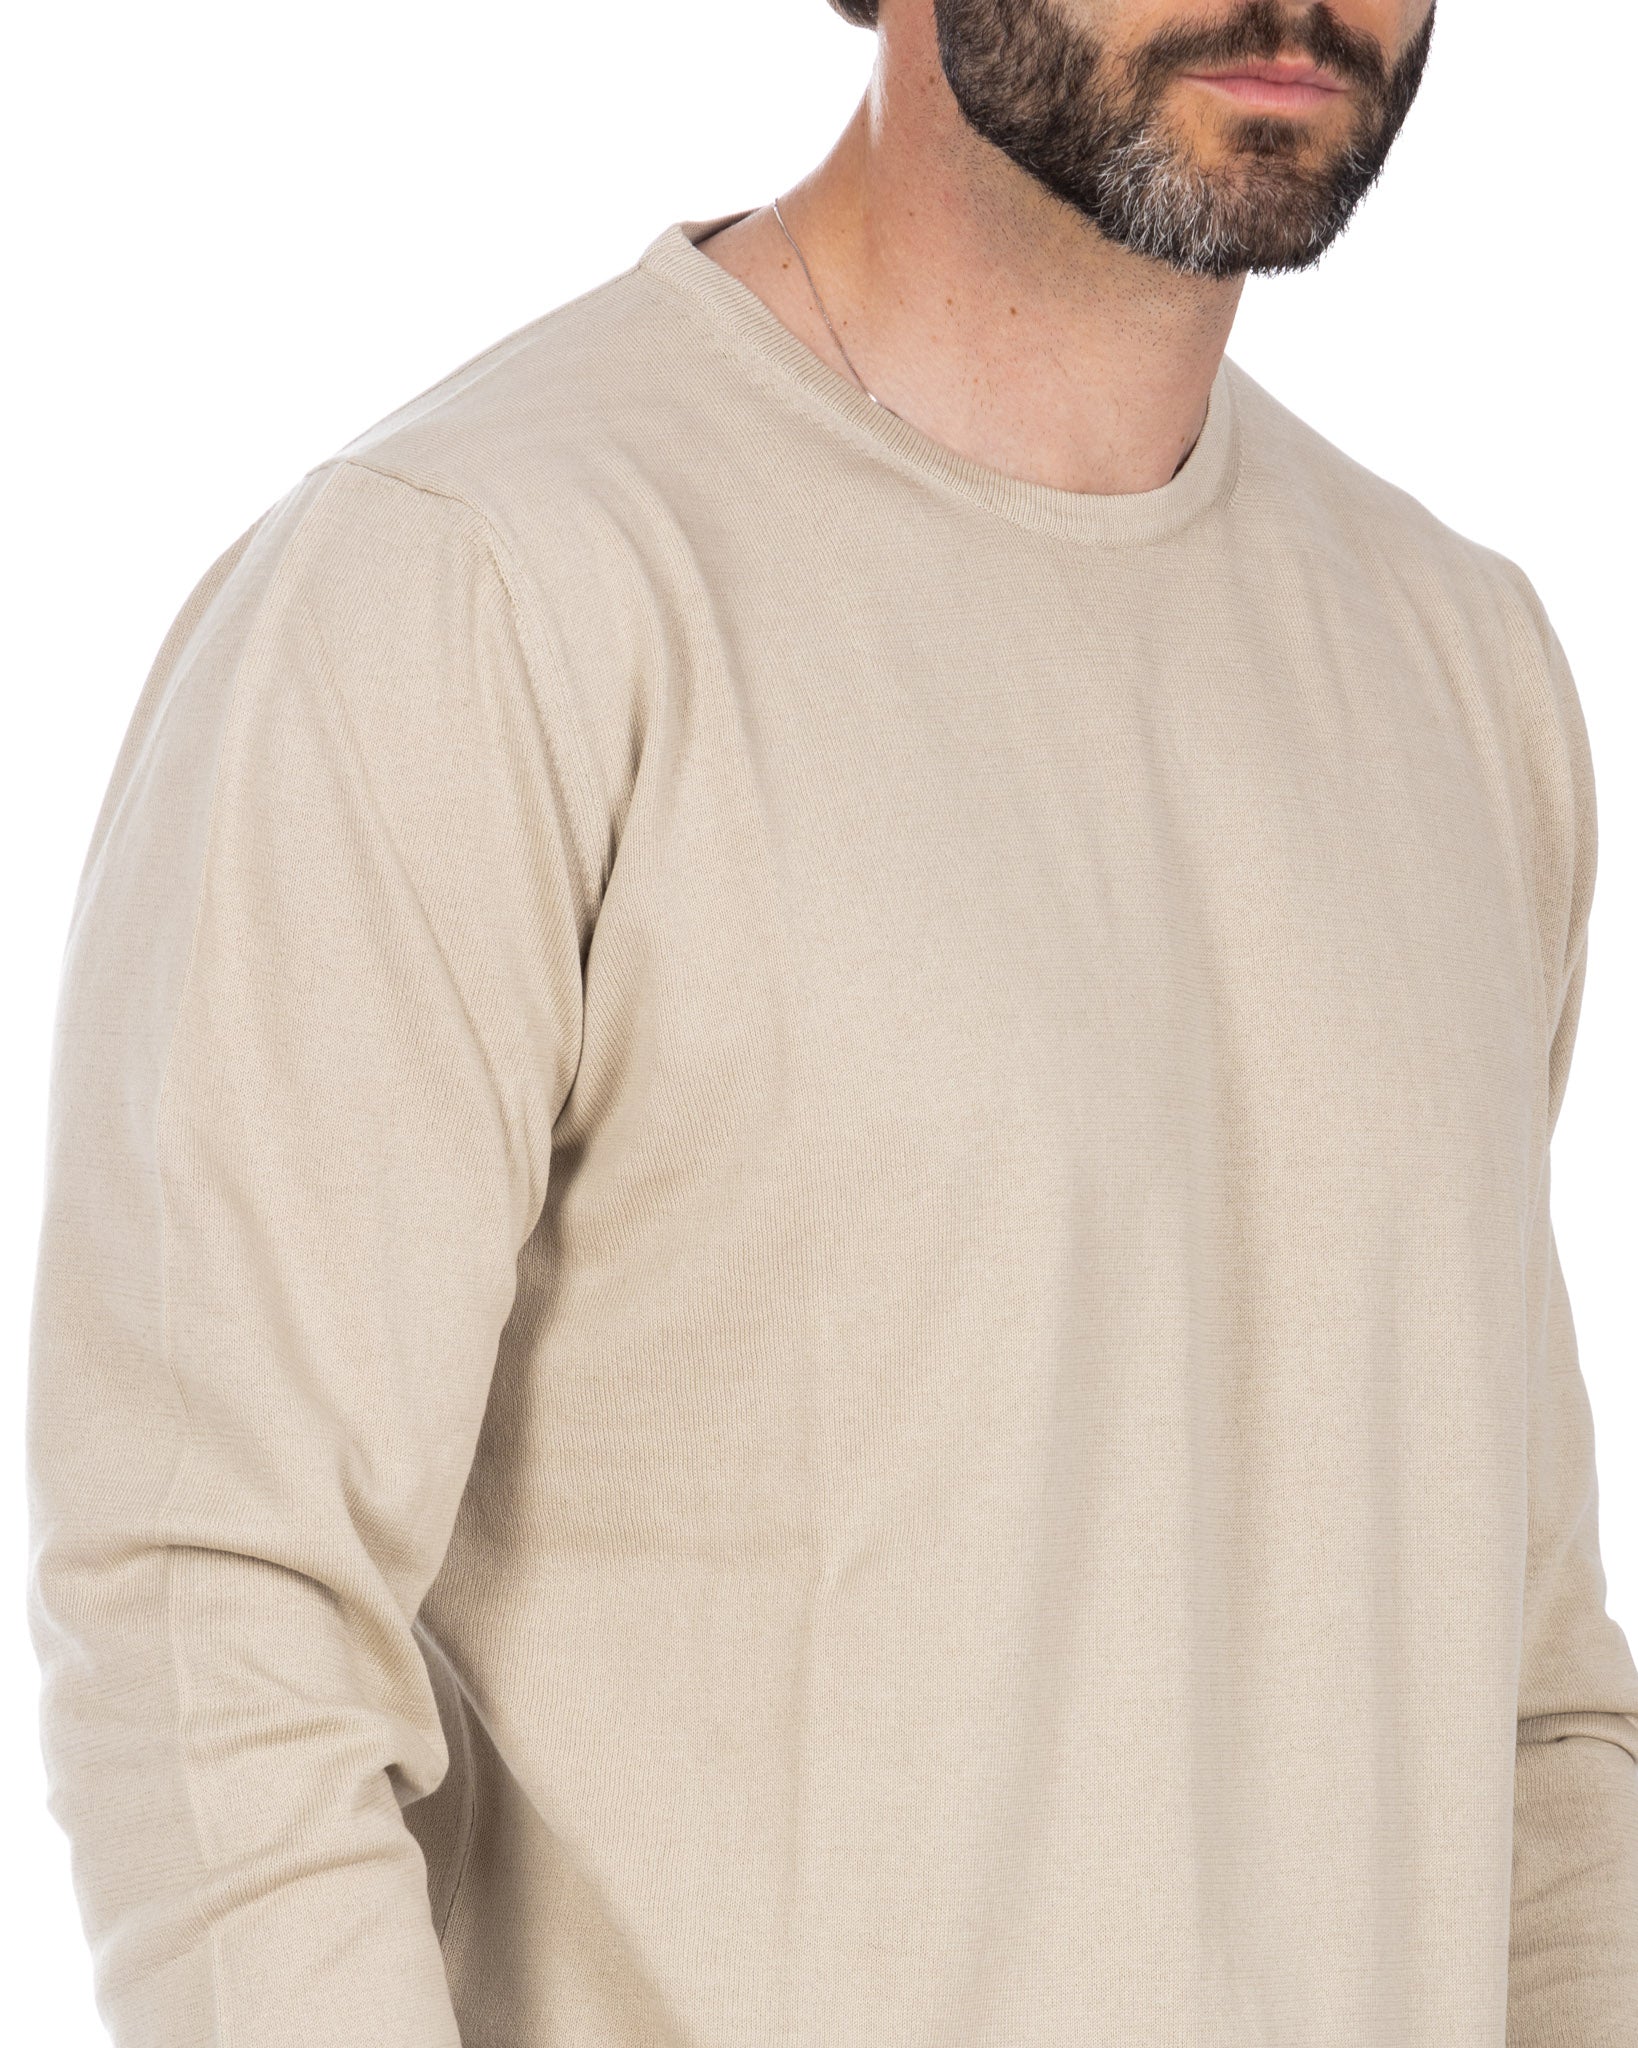 Daniil - beige cotton sweater